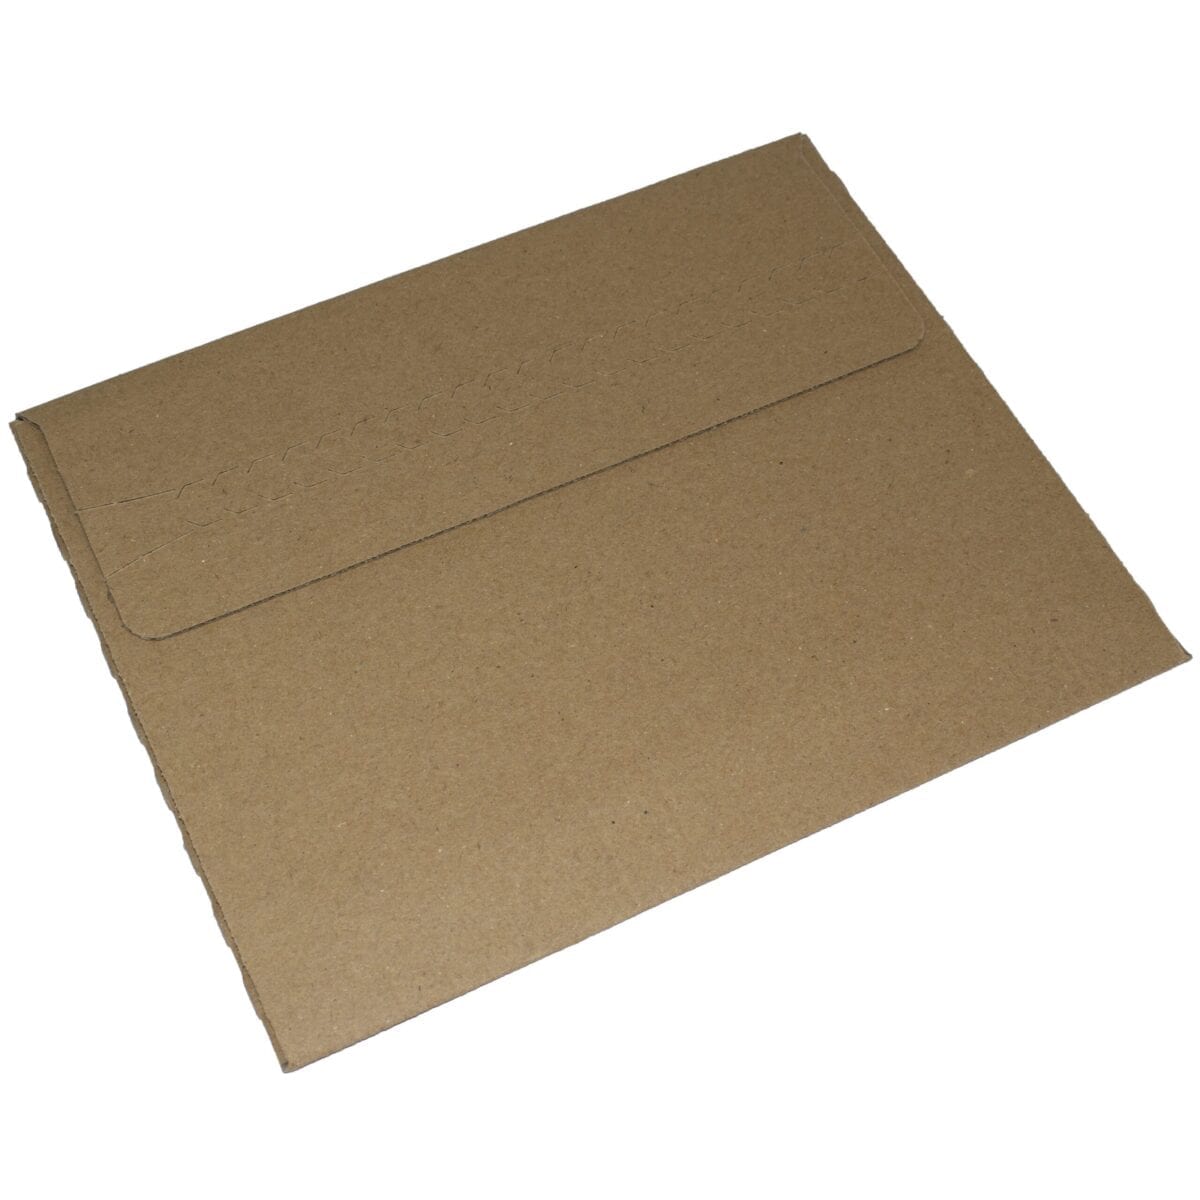 255x204mm Cardboard Envelopes | Packaging Supplies